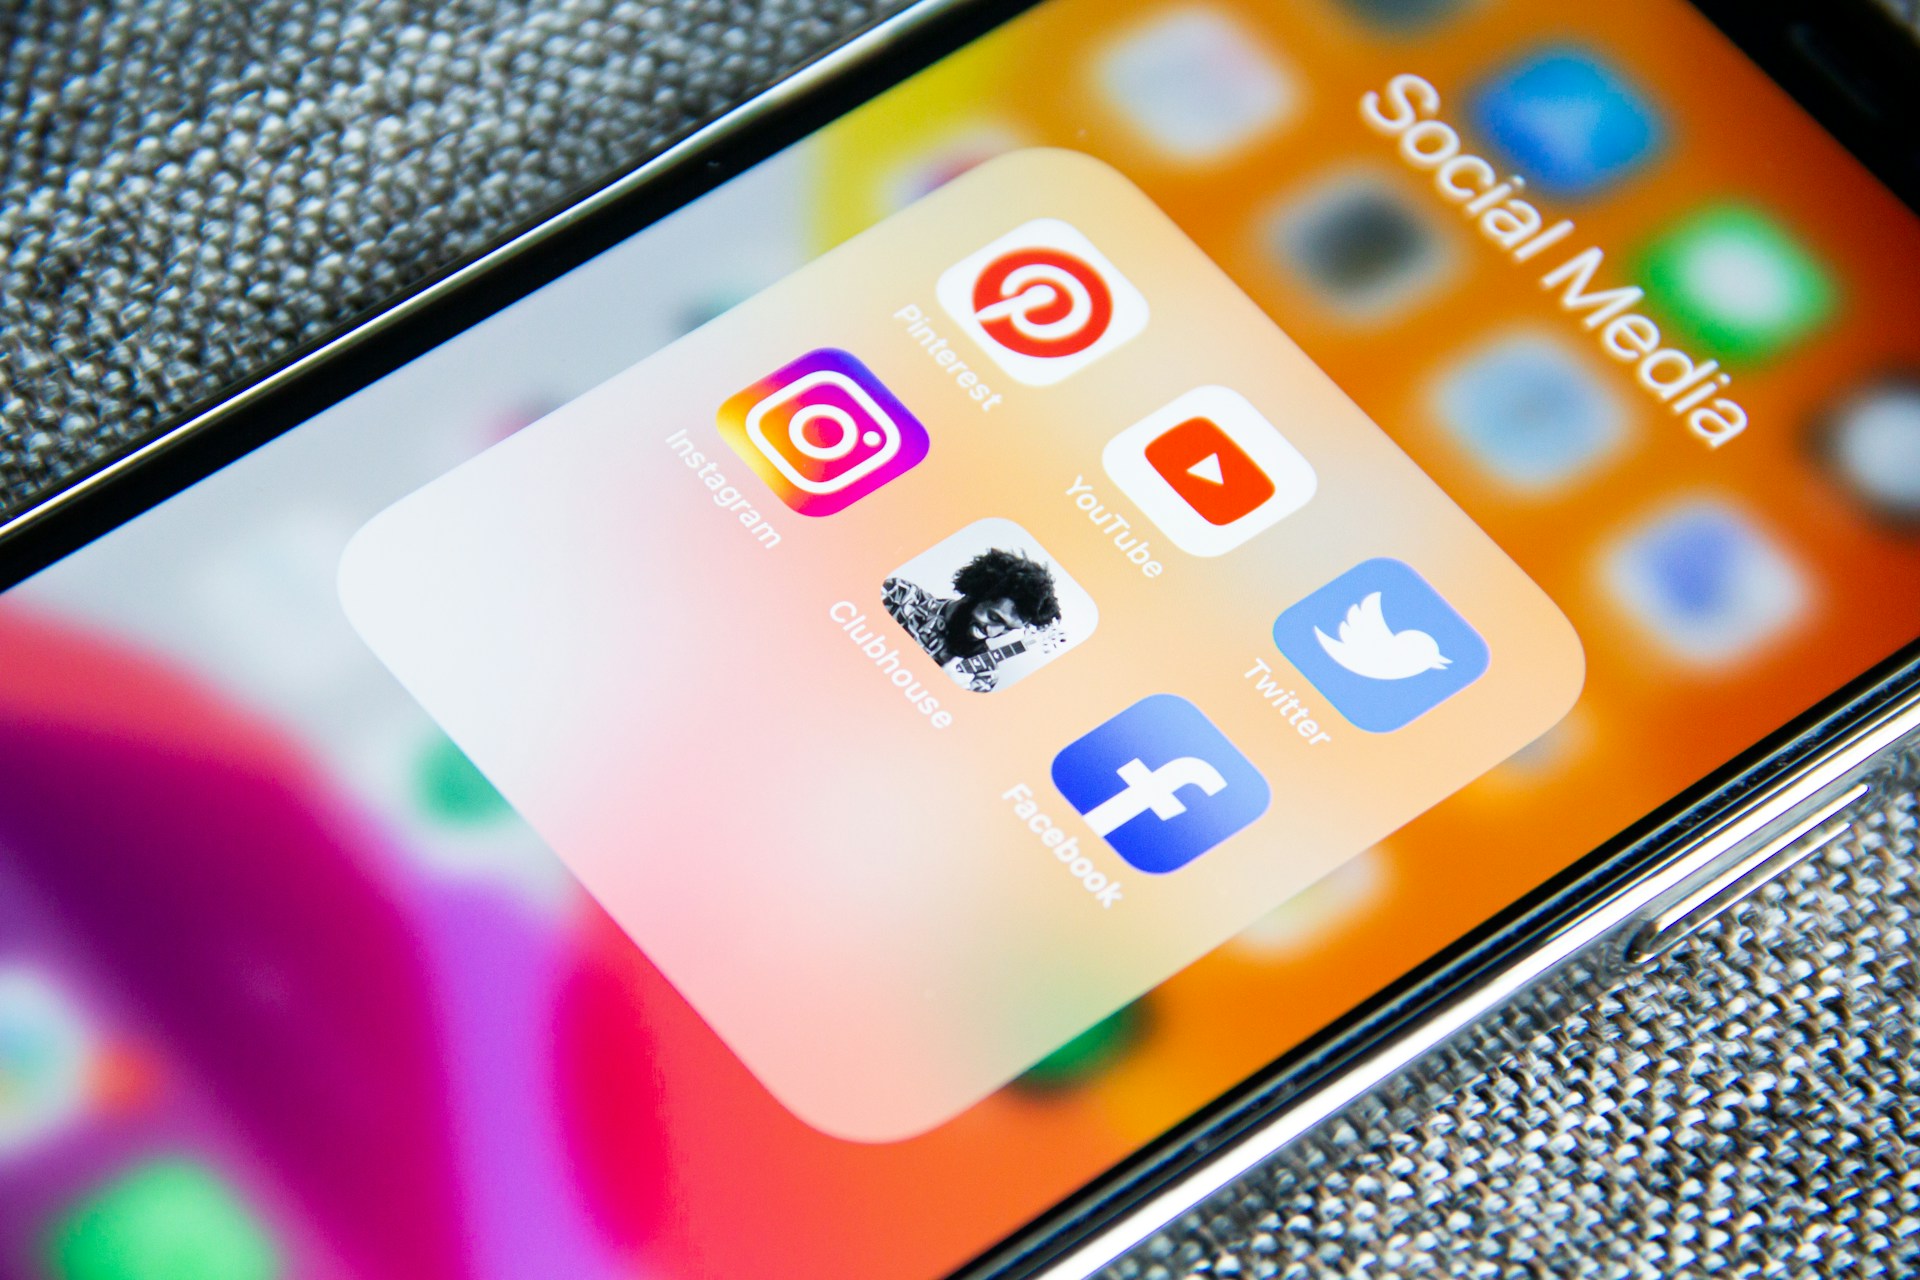 Smartphone screen displaying several social media app icons